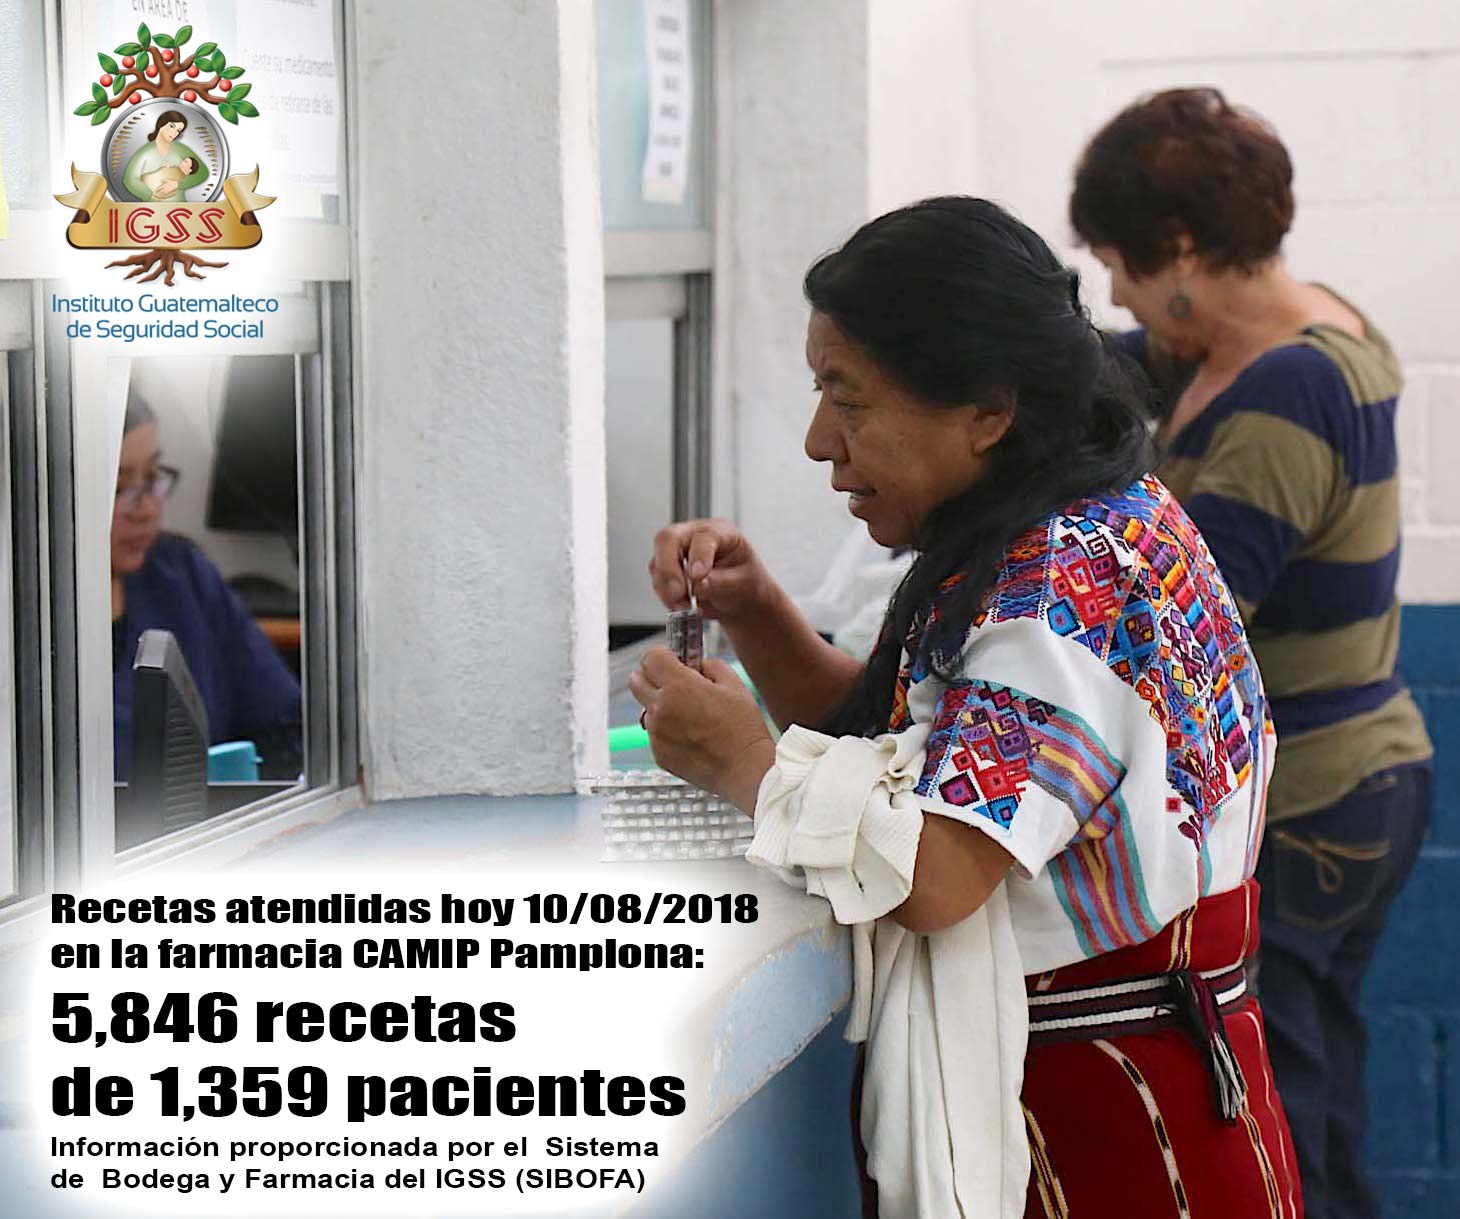 5,846 Recetas atendidas en farmacia de CAMIP Pamplona IGSS - Noticias IGSS